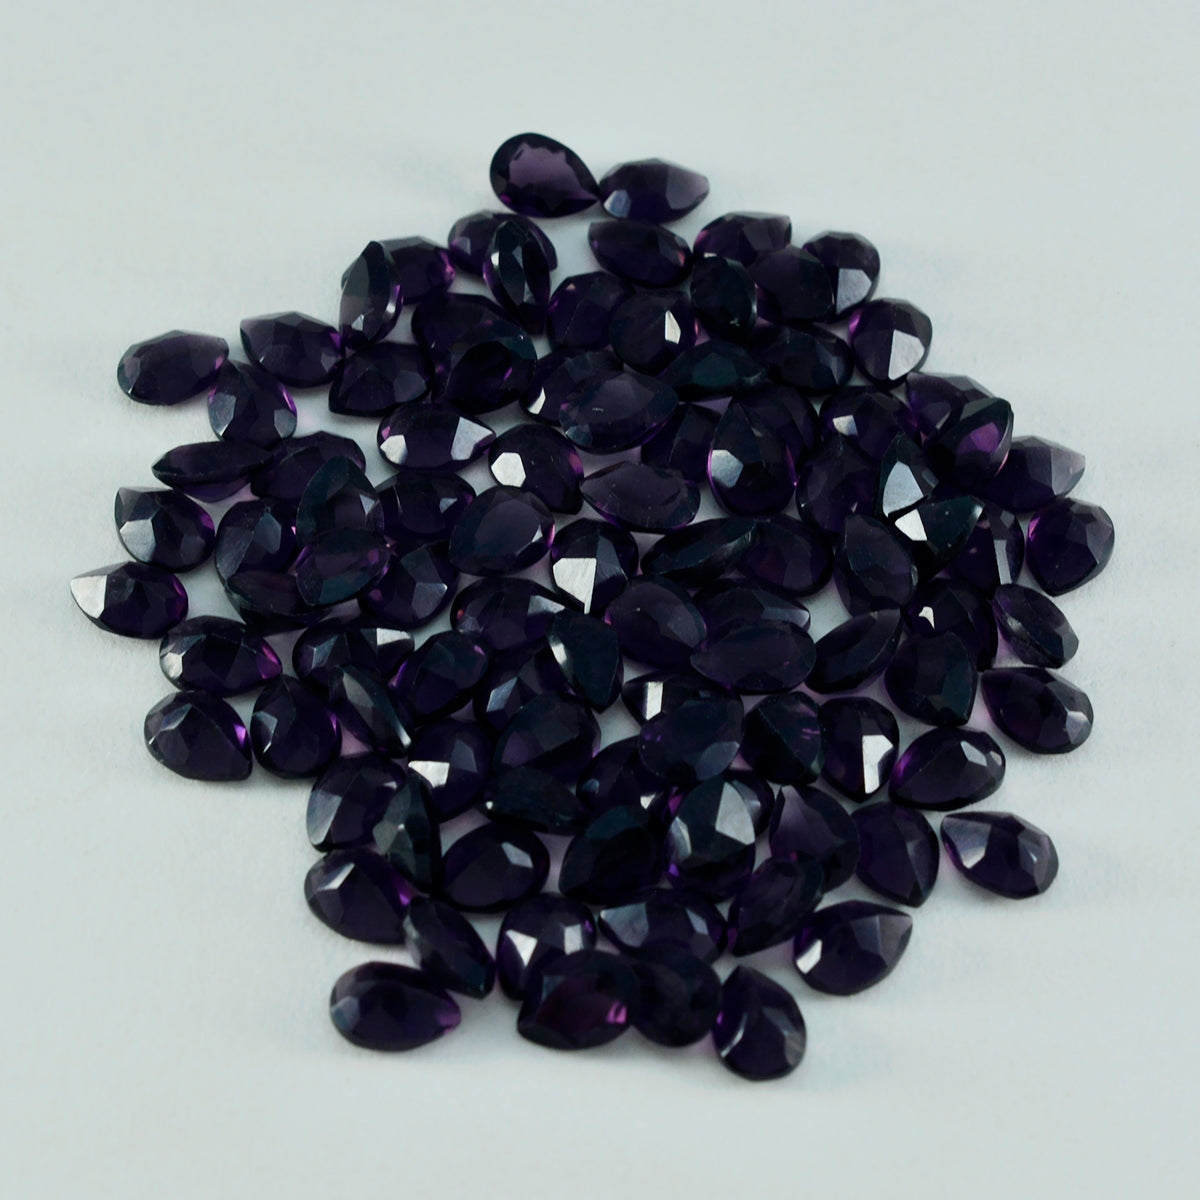 riyogems 1 pezzo di ametista viola cz sfaccettato 5x7 mm a forma di pera, una pietra di qualità